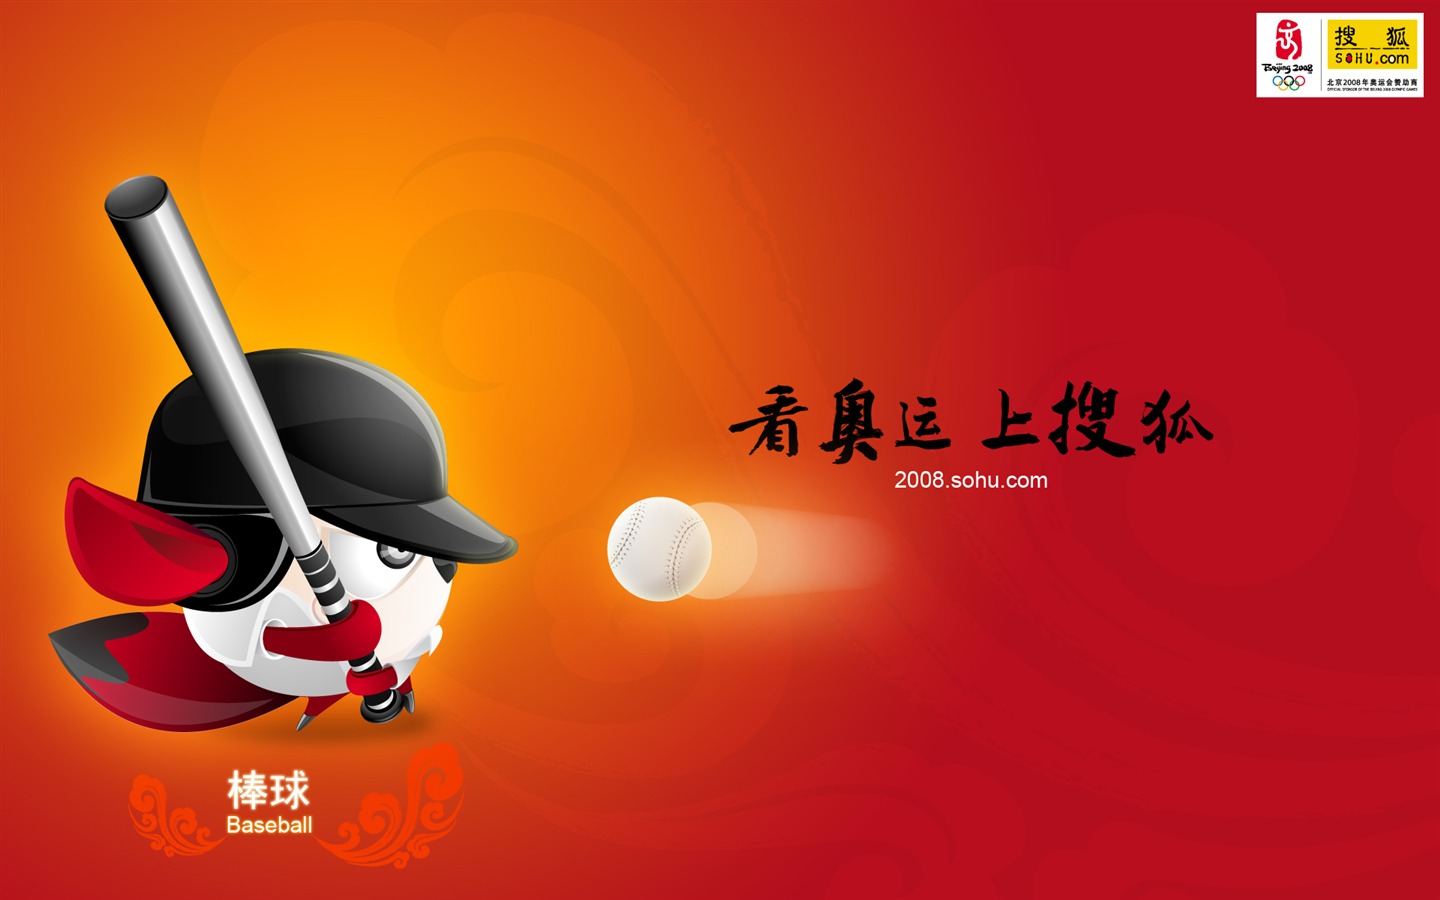 Sohu Olympic sports style wallpaper #23 - 1440x900